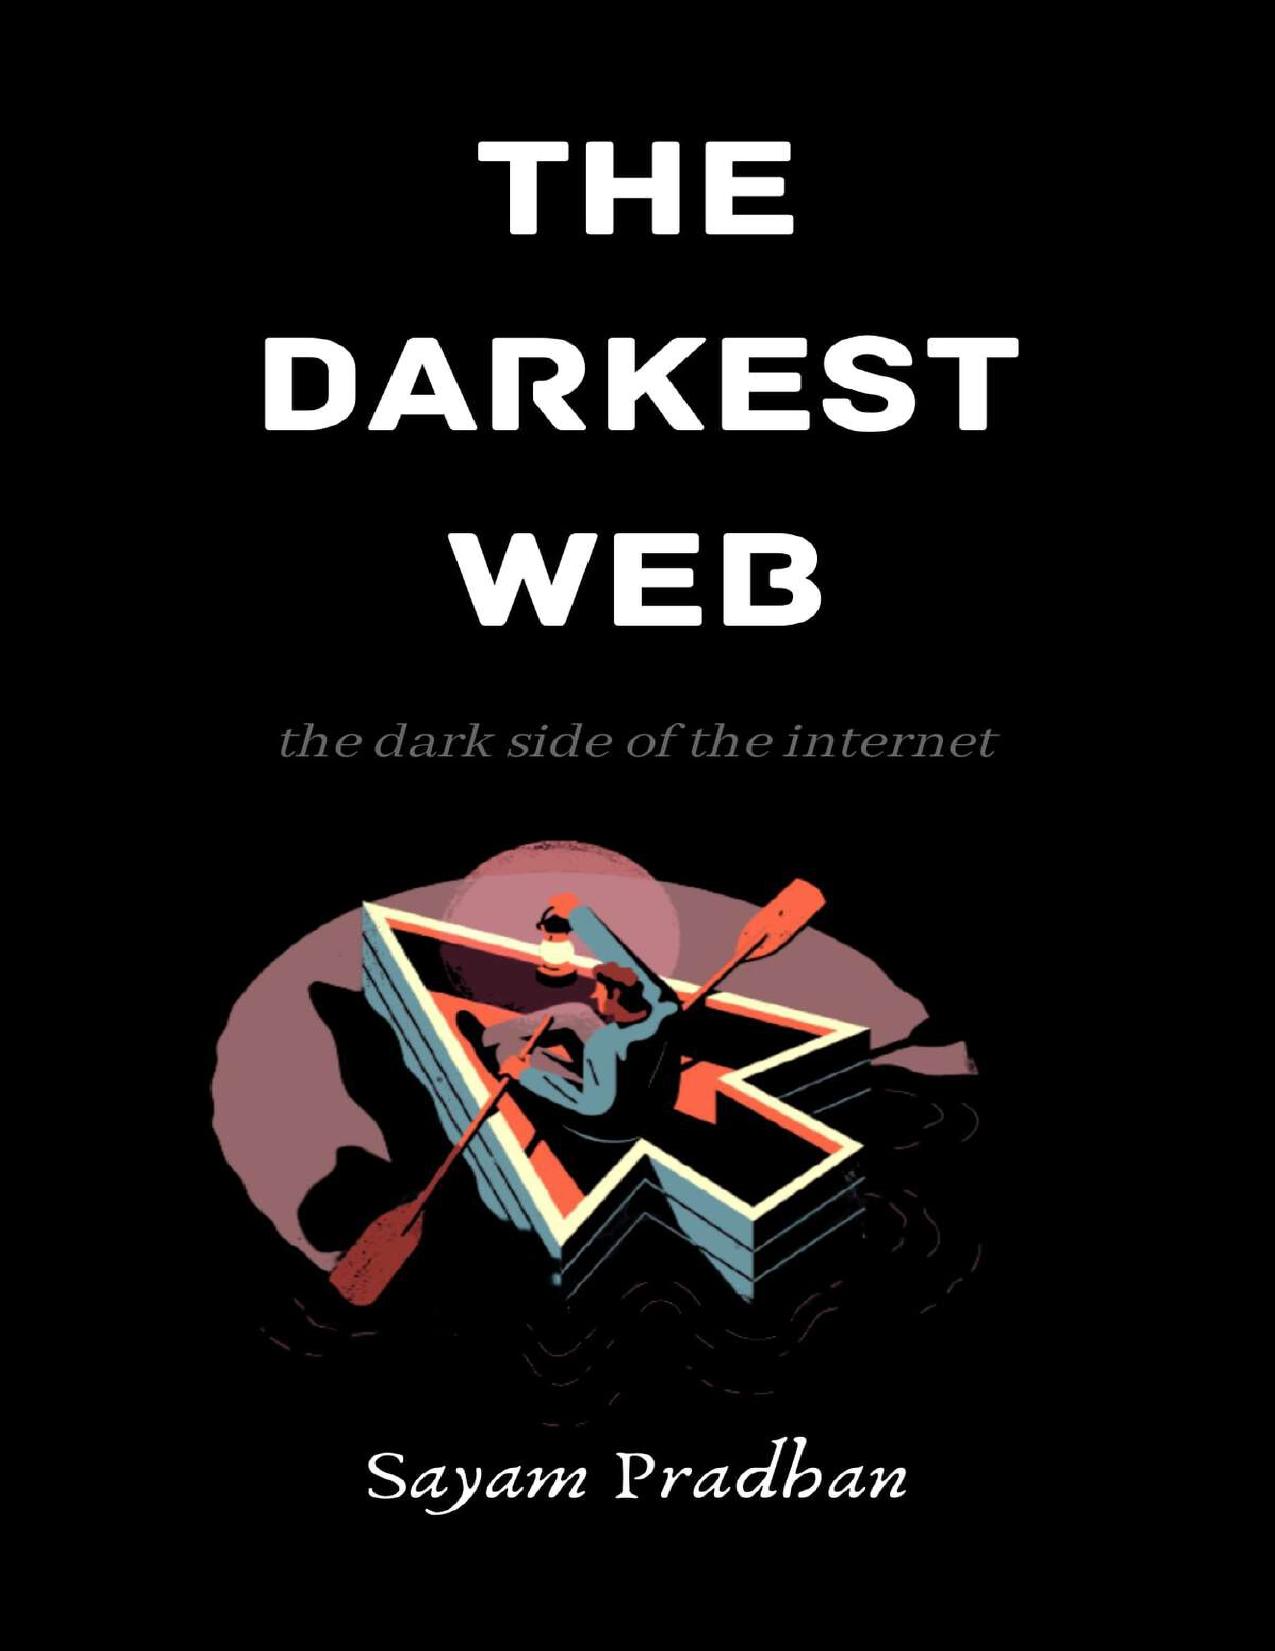 The Darkest Web: Dark side of the internet